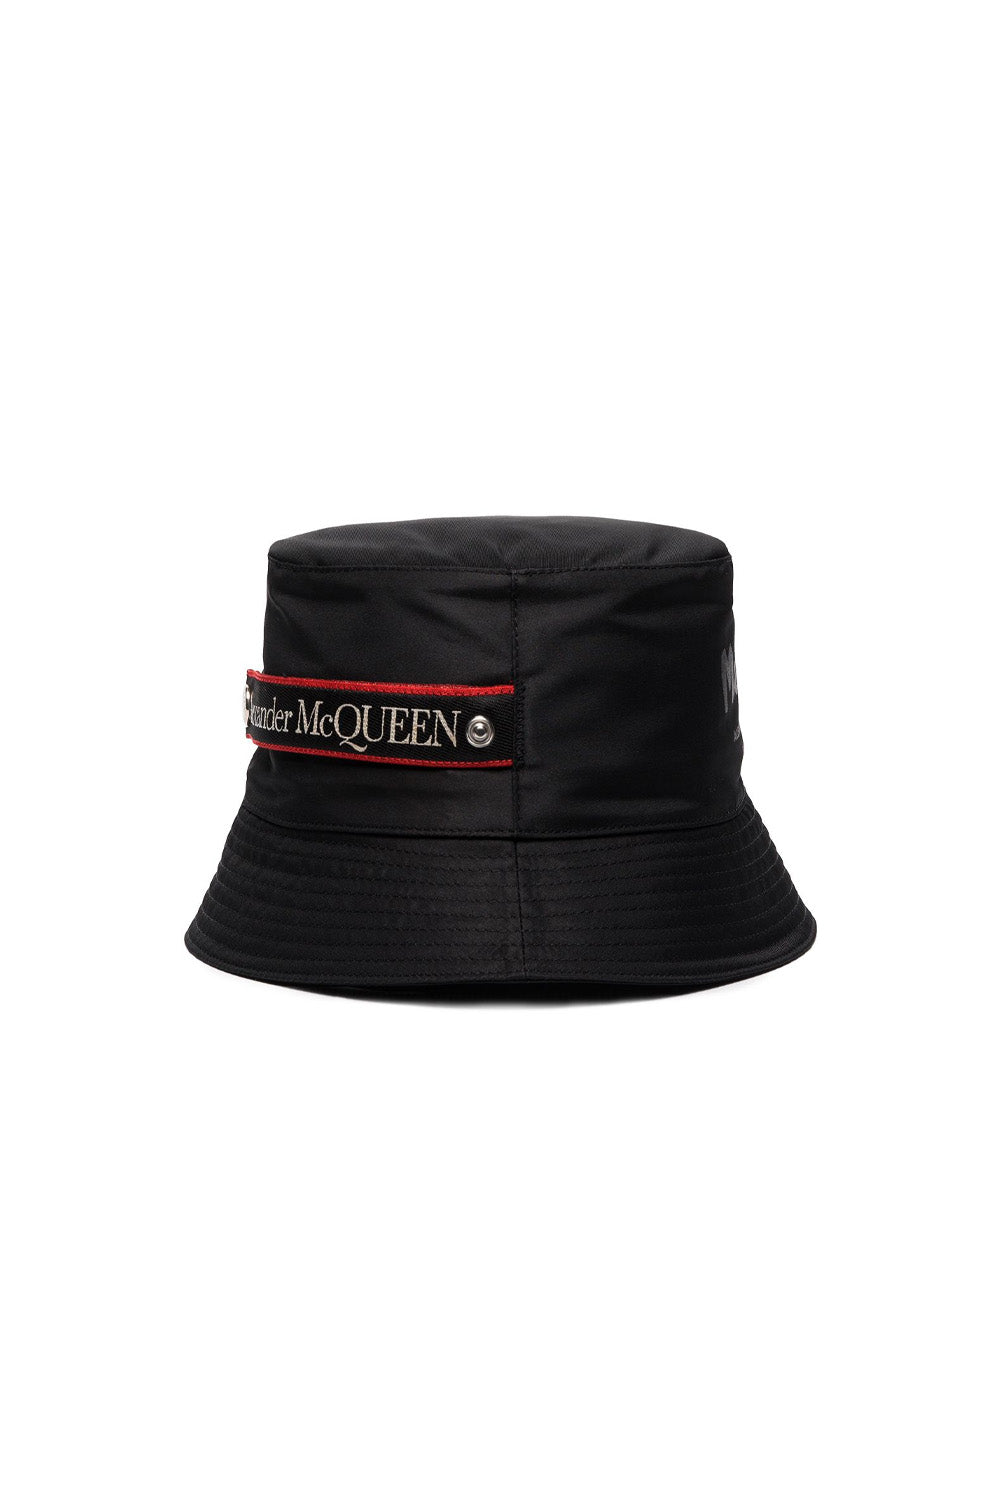 Alexander McQueen Graffiti logo bucket hat